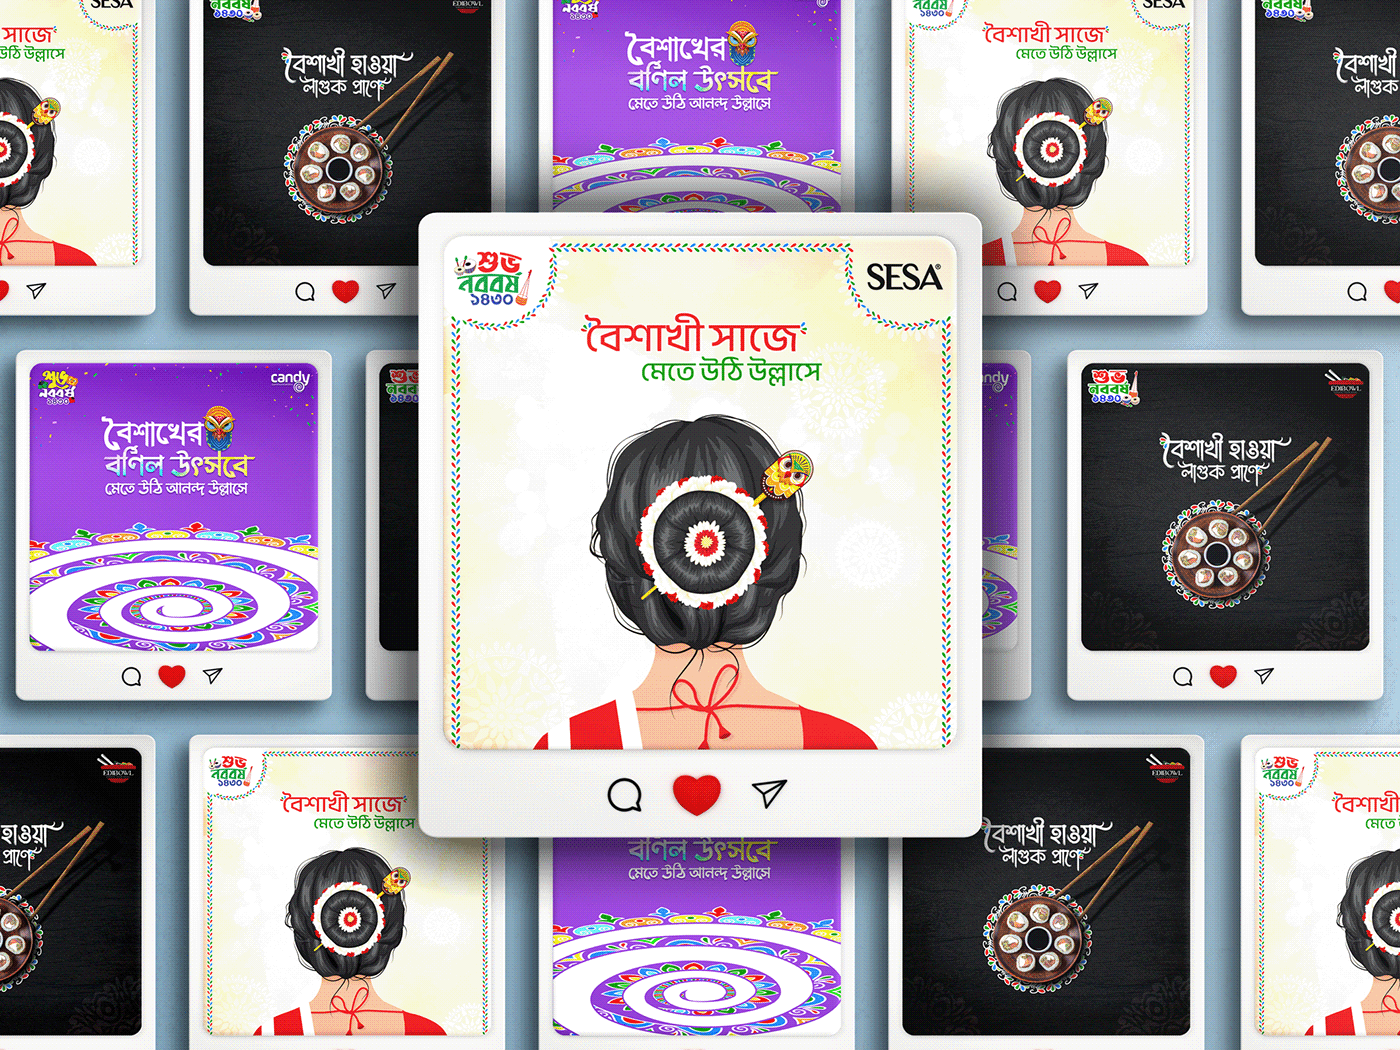 14 April Bangla festival Bengali New Year creatives boishak ads Pohela Boishakh pohela boishakh 1430 Social media post পহেলা বৈশাখ বাংলা নববর্ষ শুভ নববর্ষ